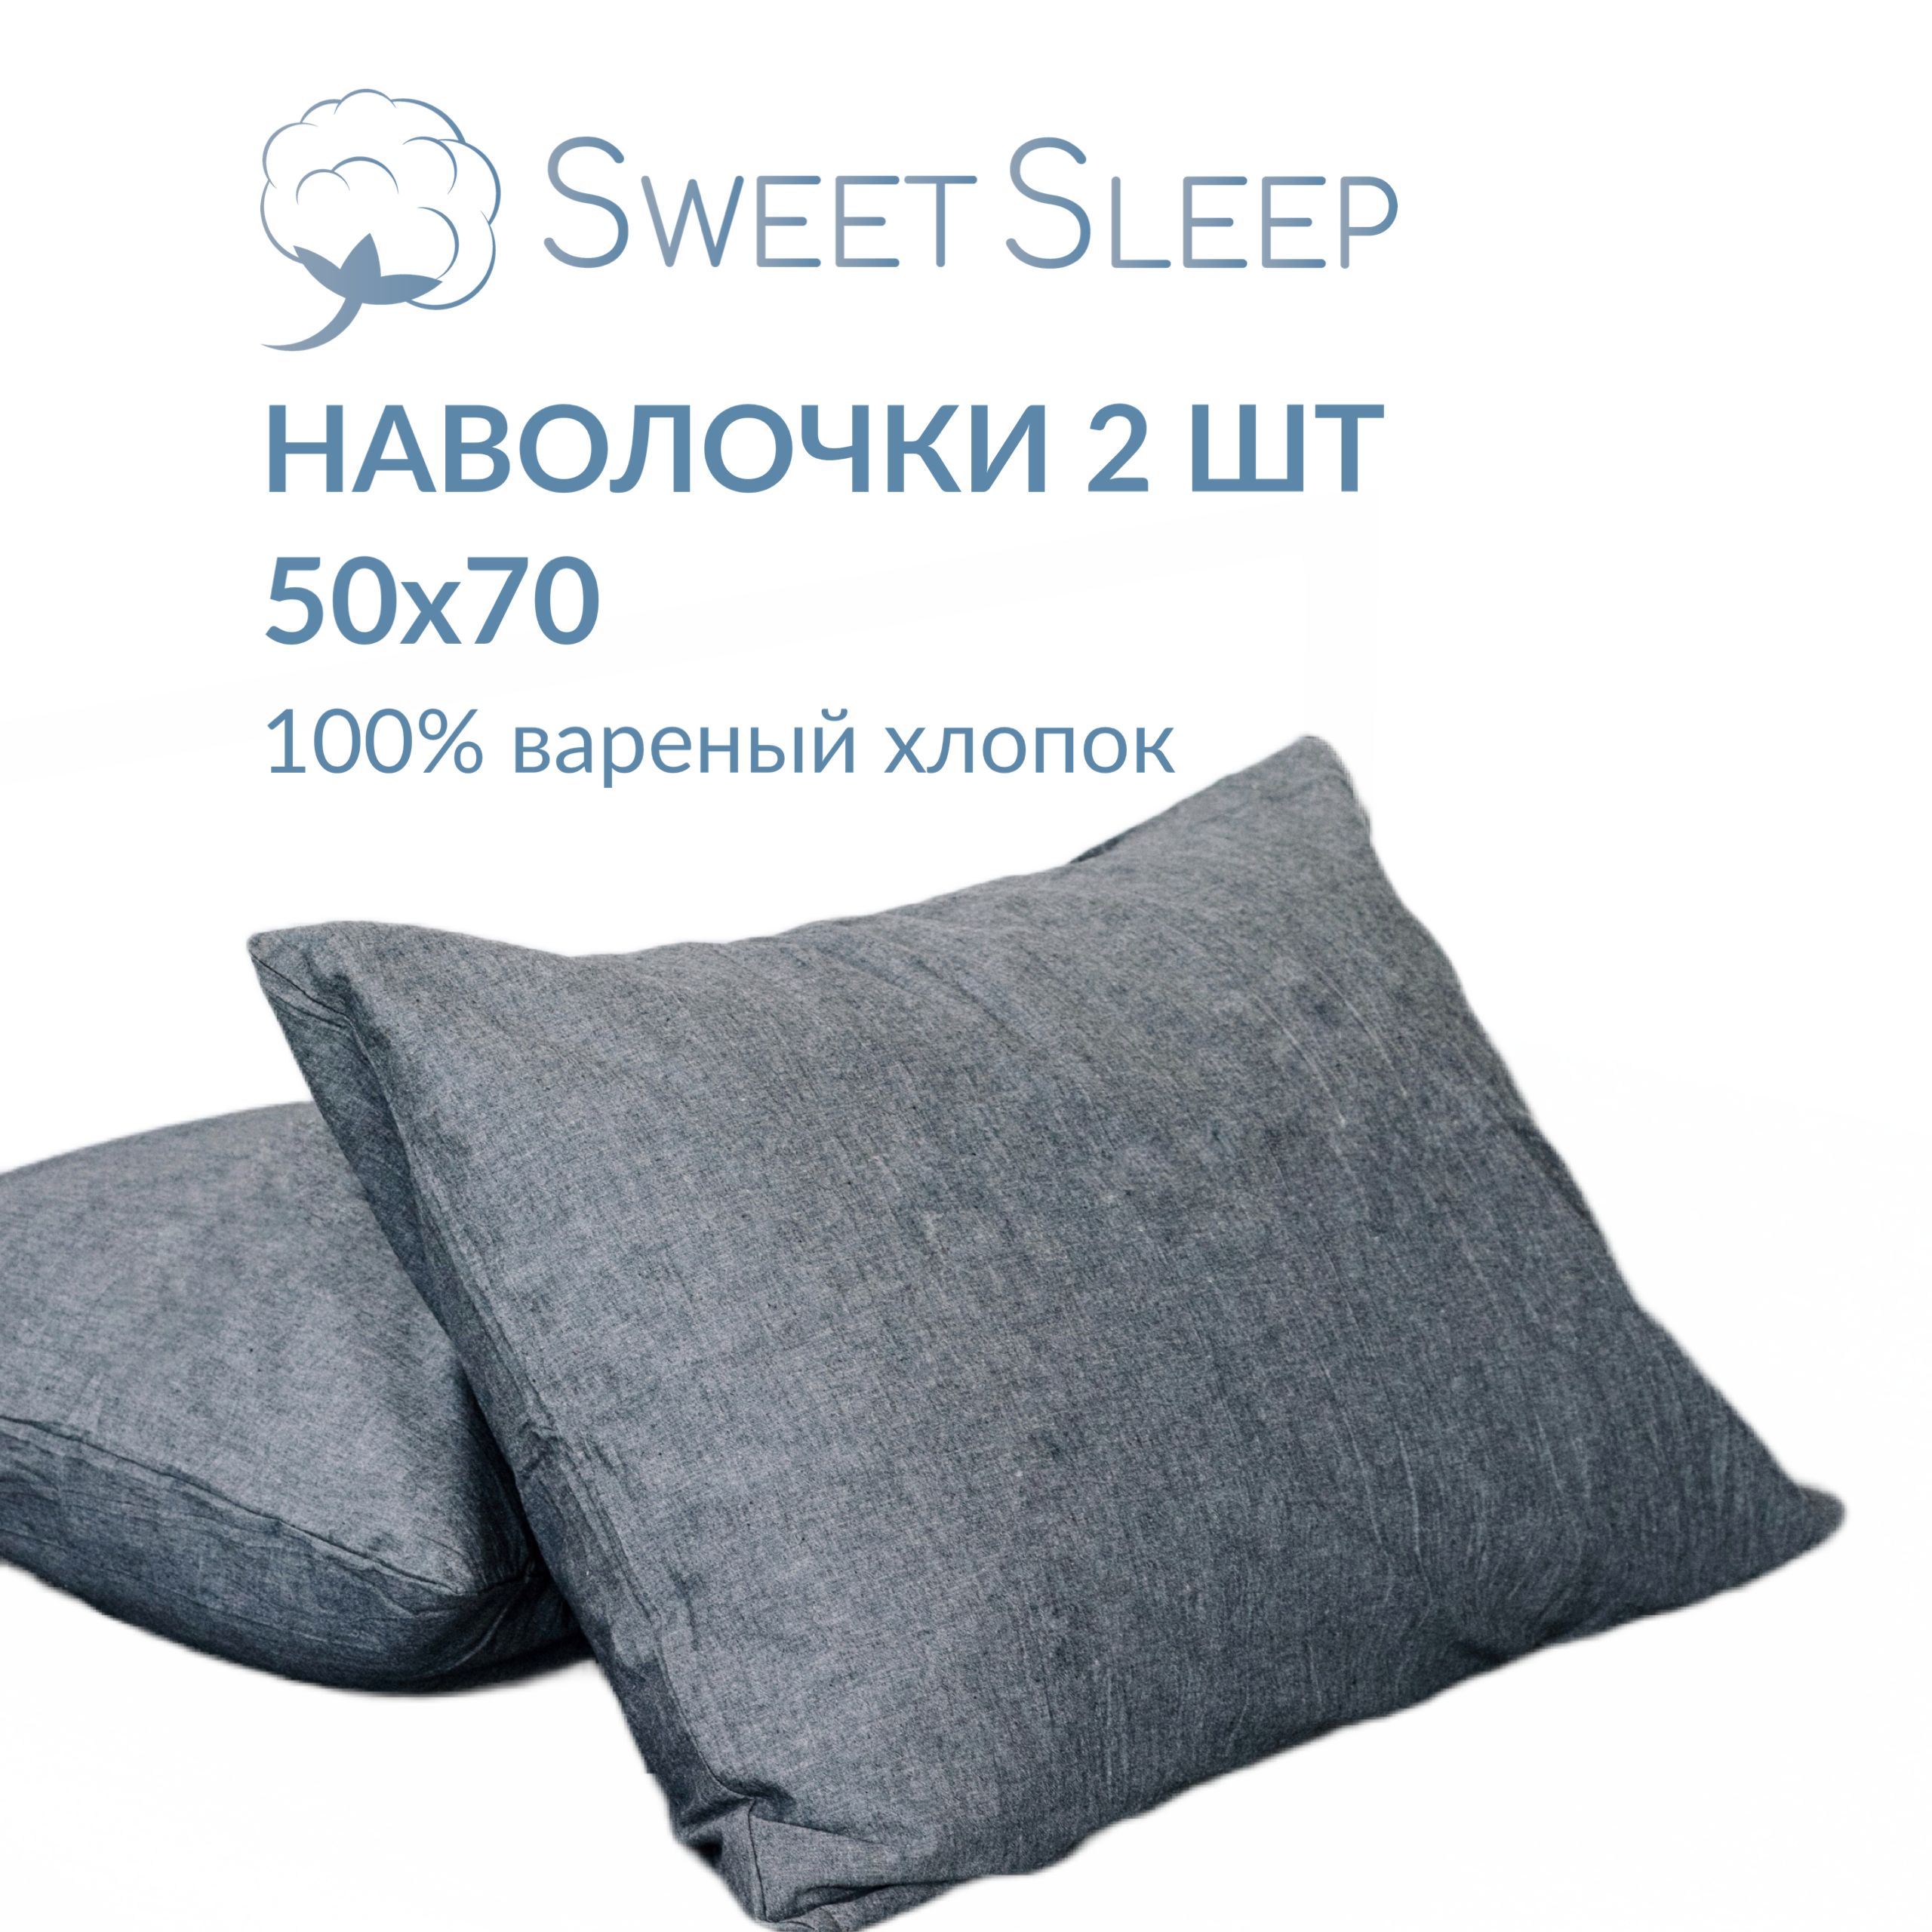 Набор наволочек Sweet Sleep варёный хлопок 50х70 см, графит